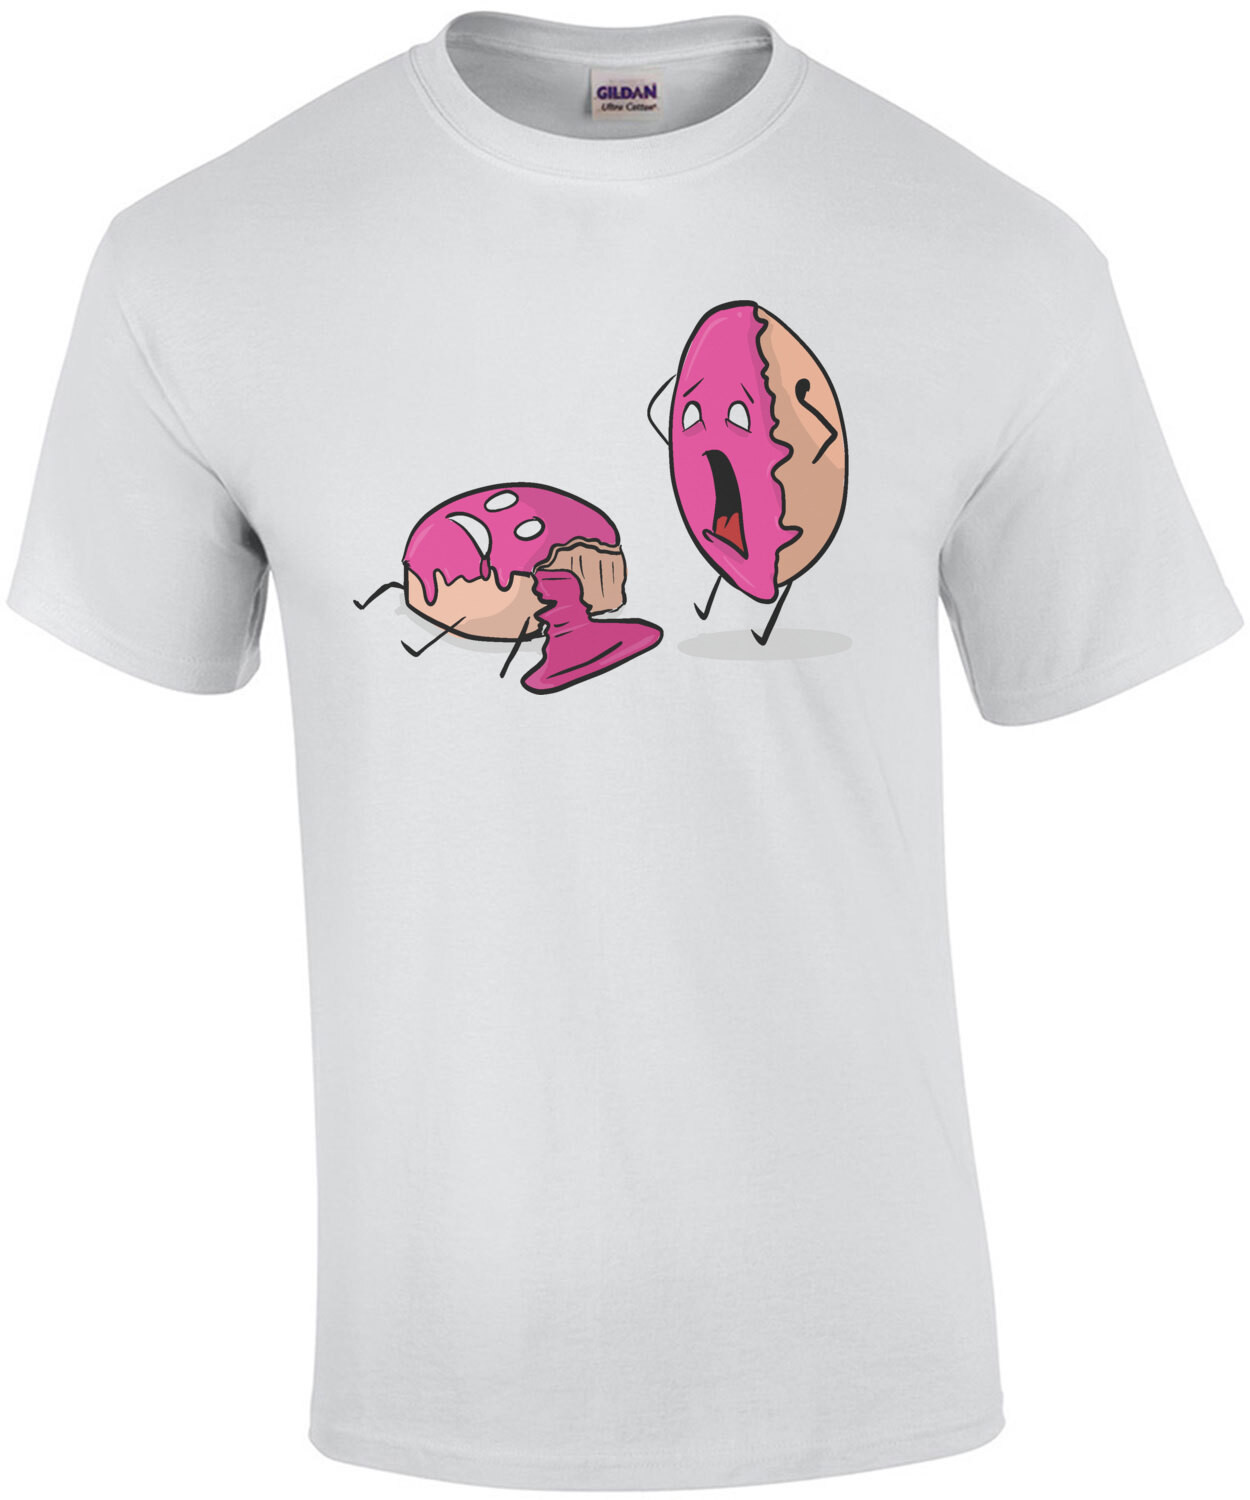 Donut Panic - funny donut pun t-shirt